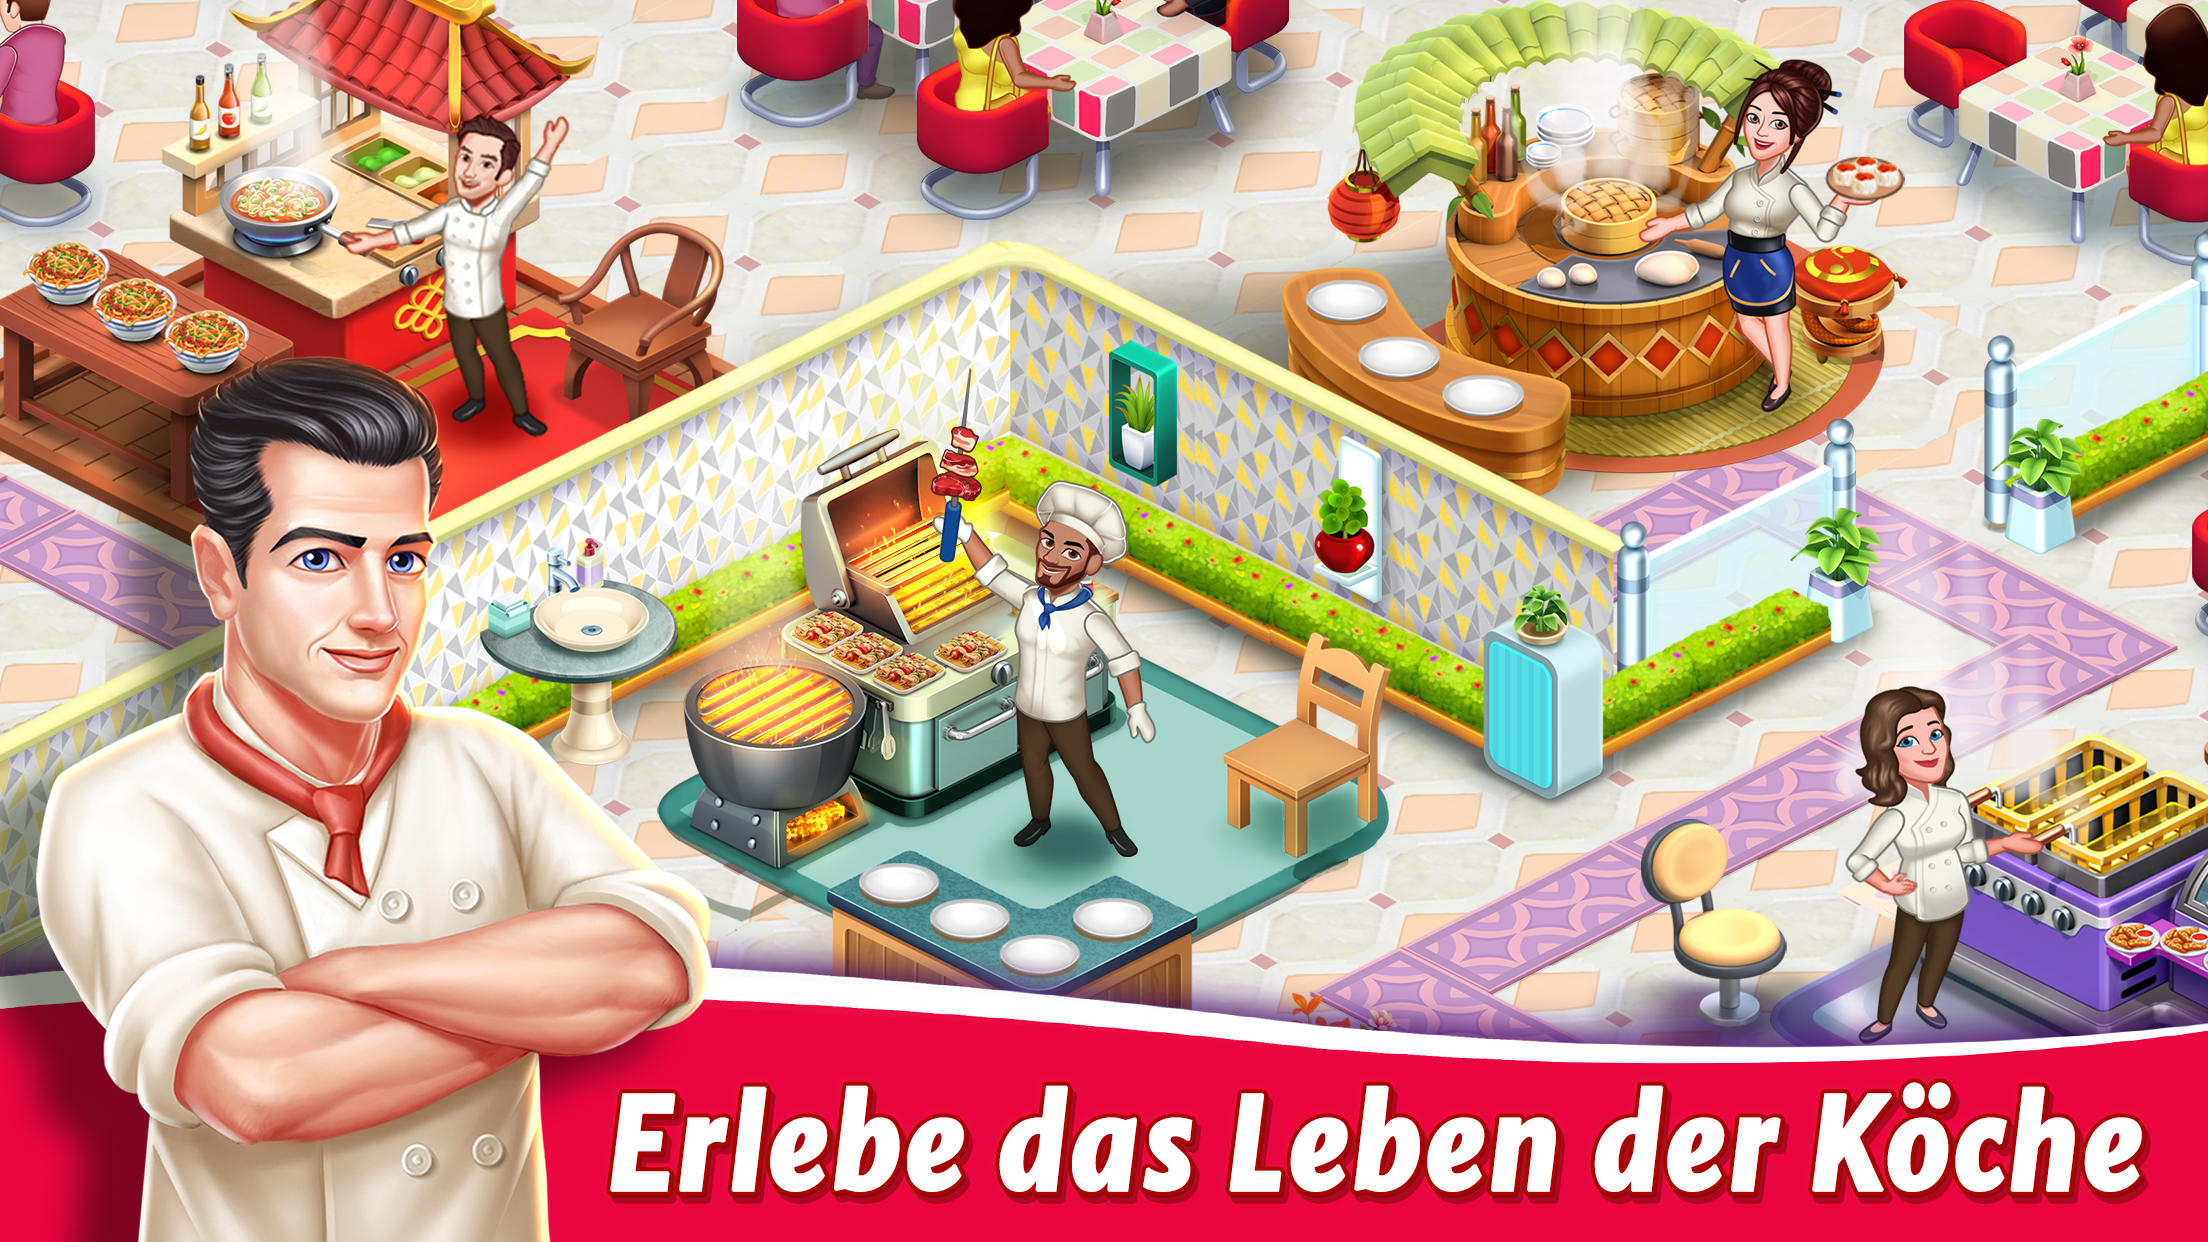 Screenshot 1 of Star Chef 2: Das Kochspiel 1.7.2